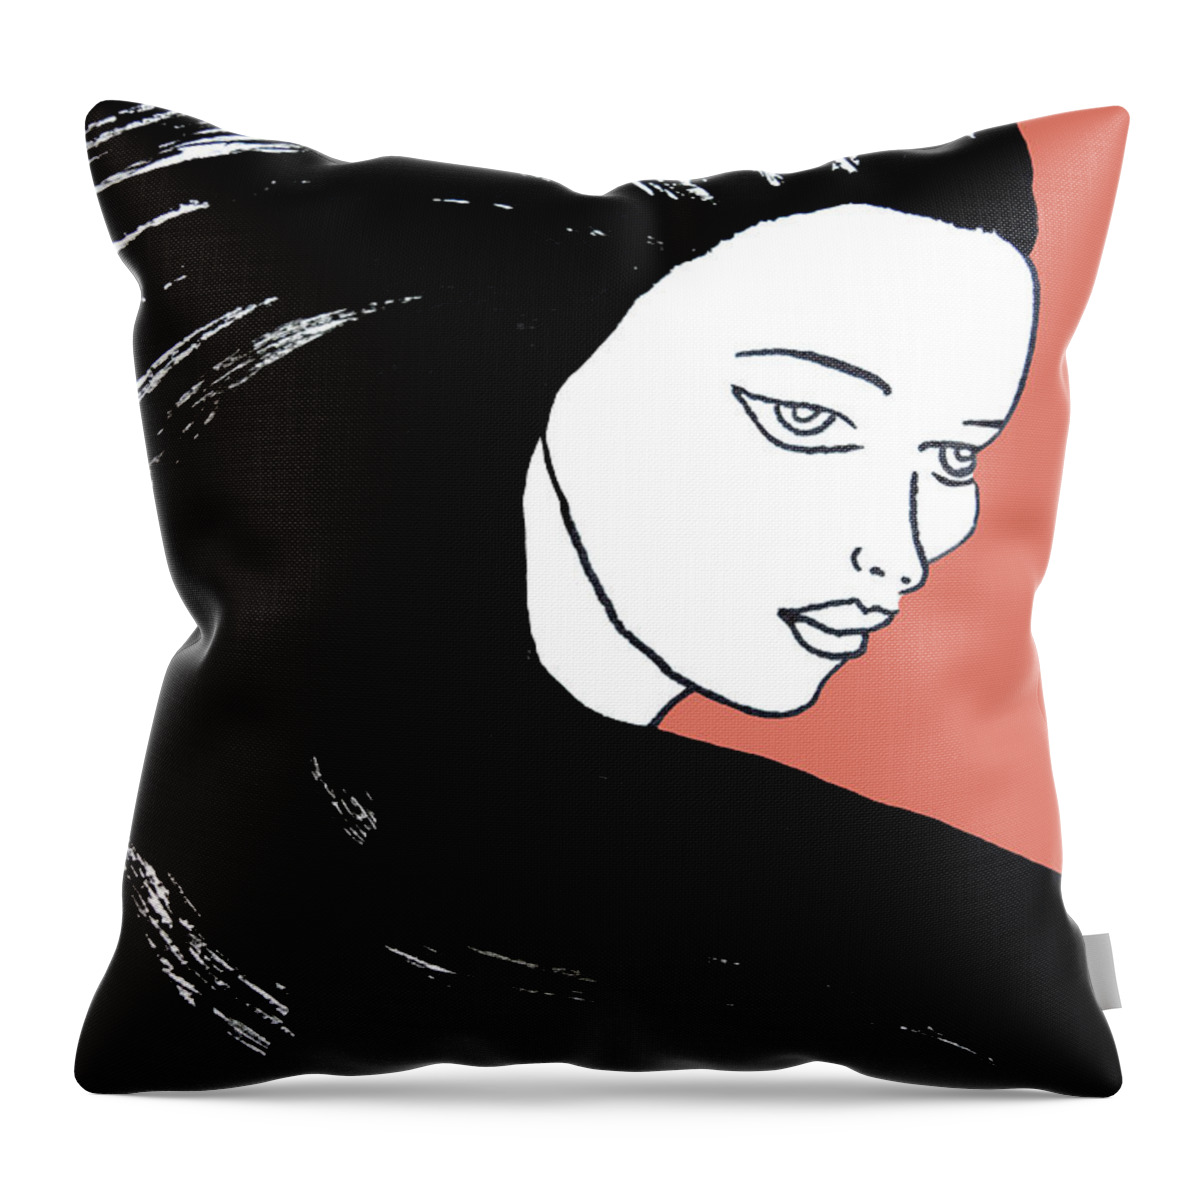 Masartstudio Throw Pillow featuring the painting Majestic Lady J0715D Calypso Coral 17-1744 ee5c6c de7766 by Mas Art Studio